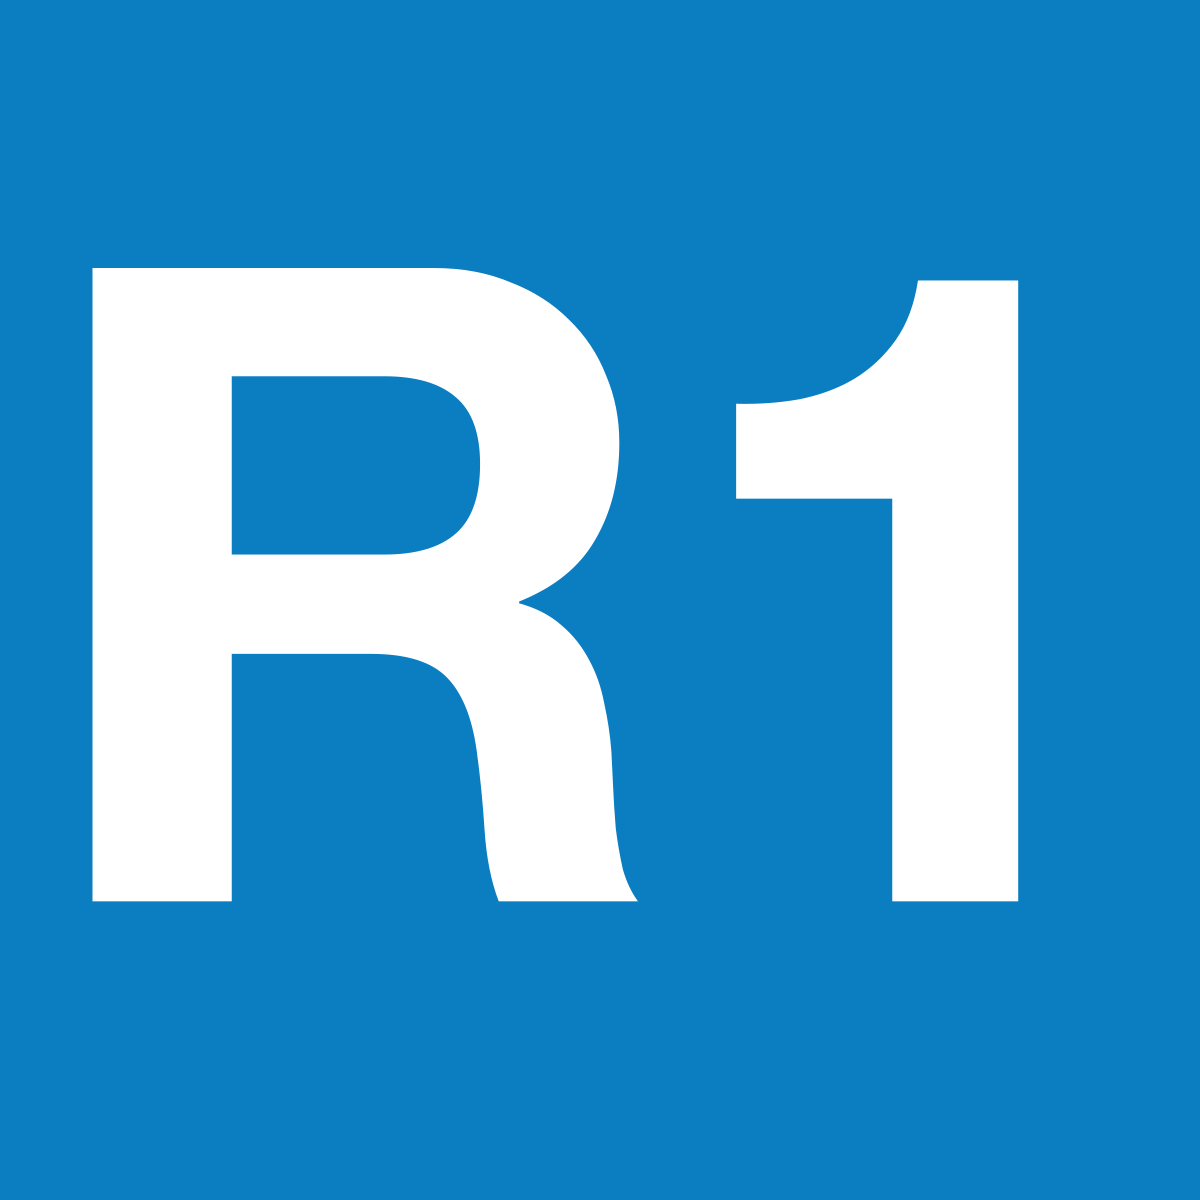 Родали. R1 Barcelona. Barcelona logo.